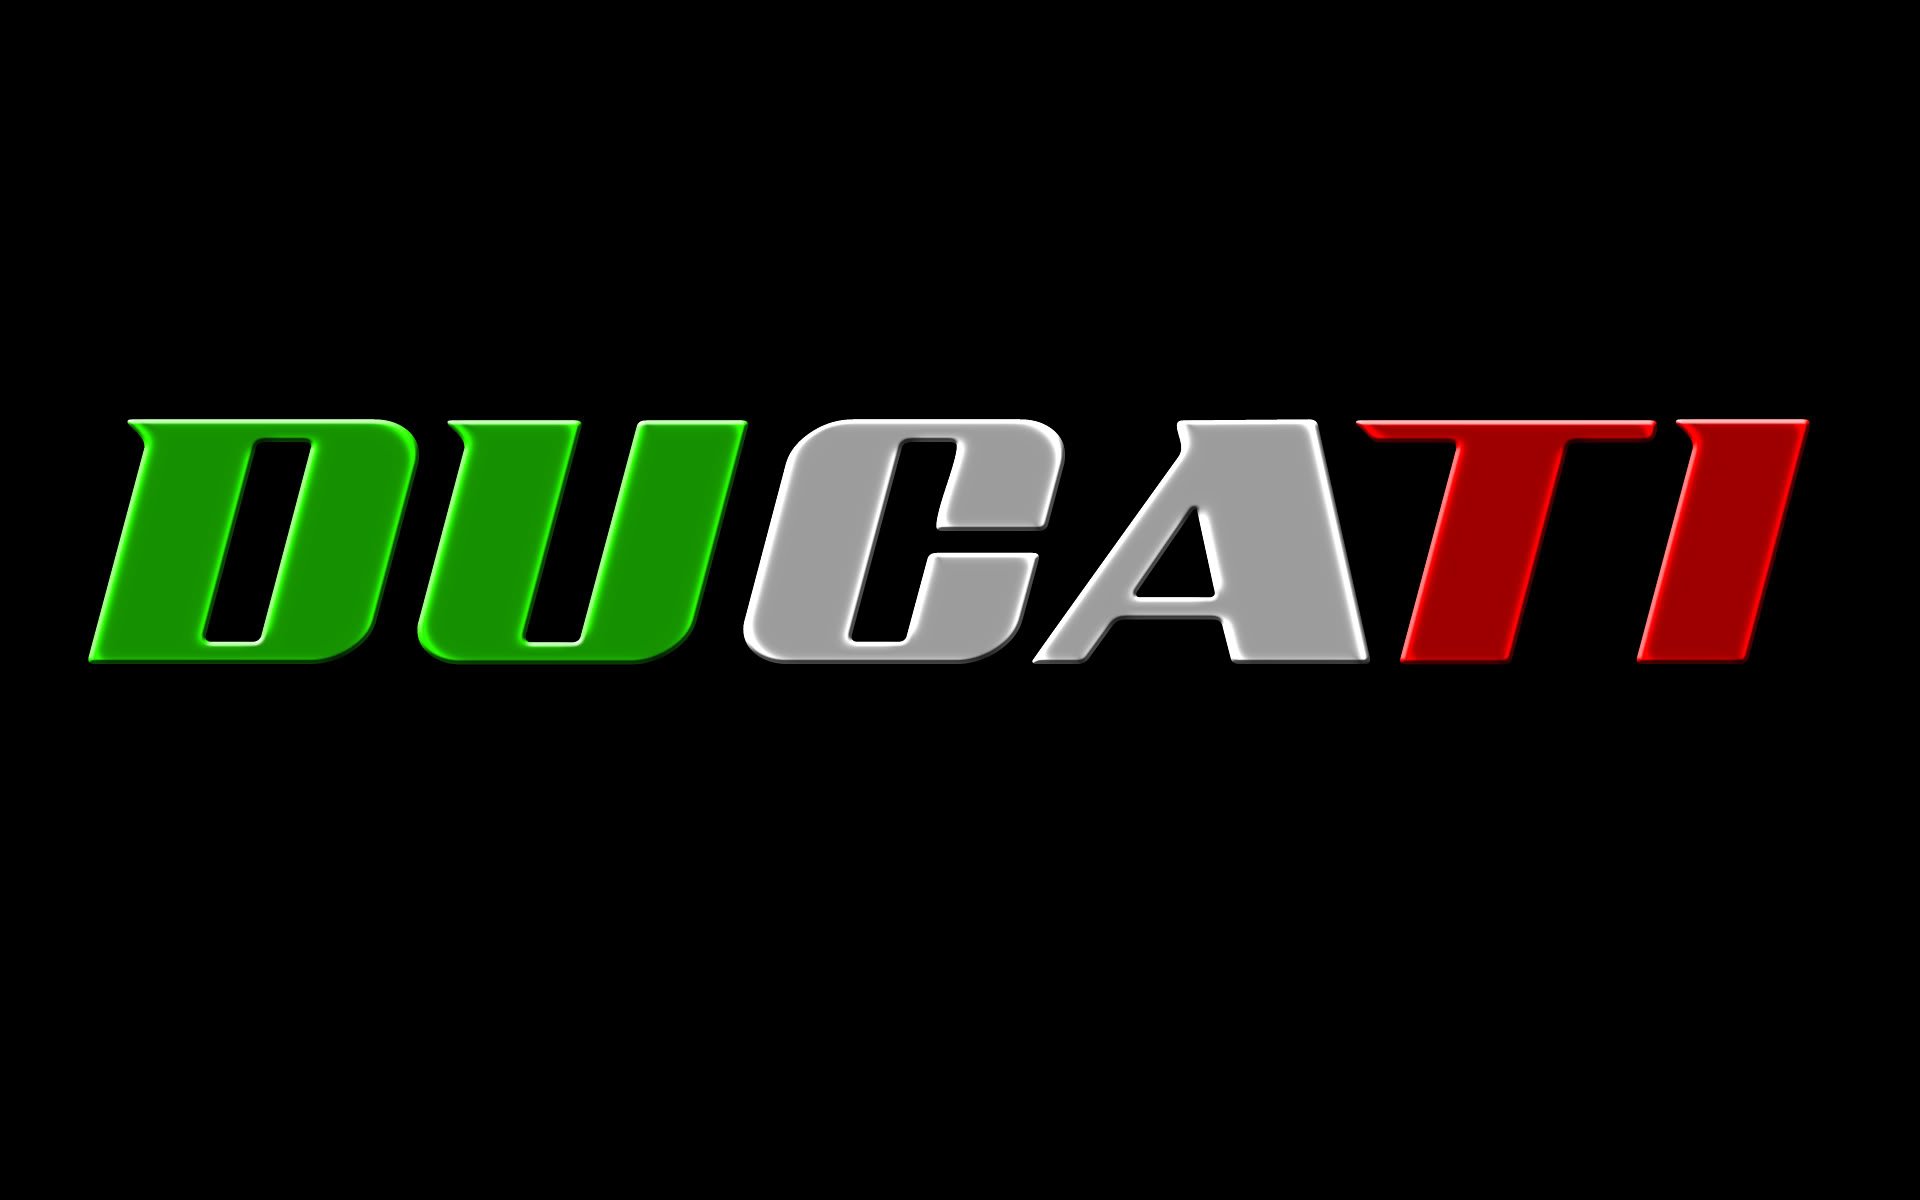 Ducati Logo Wallpaper 7350 Hd Wallpapers in Logos   Imagescicom